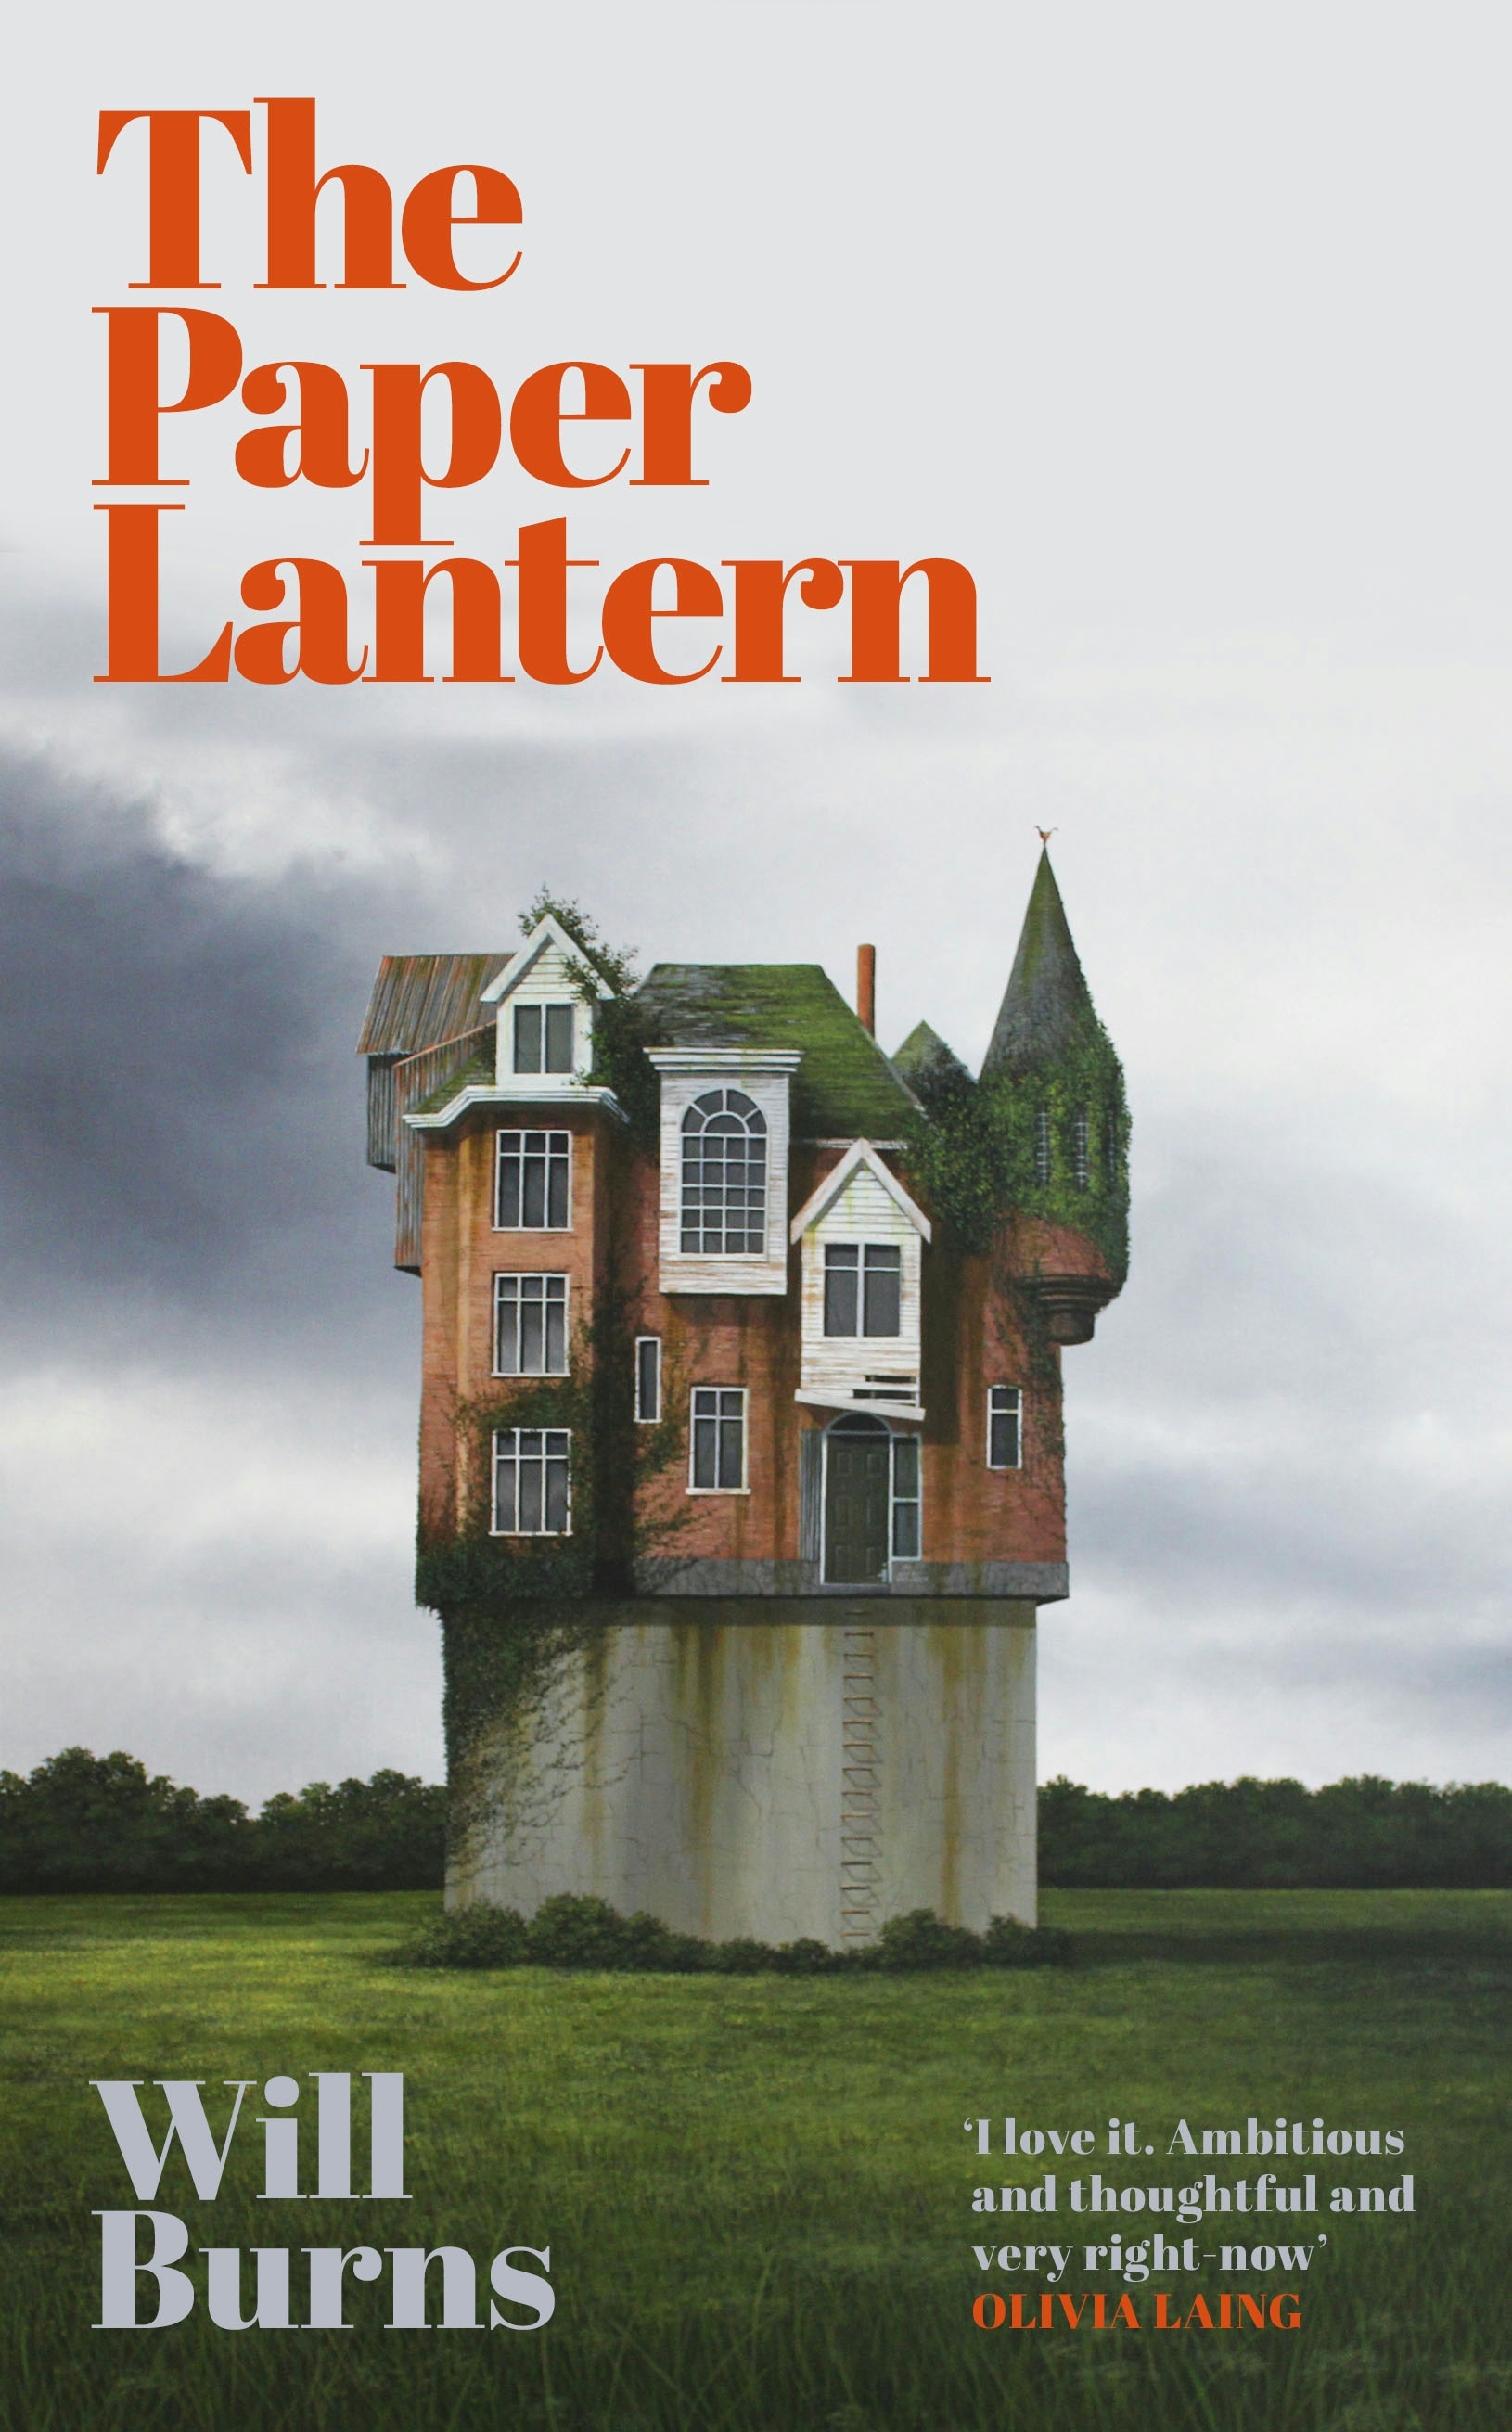 Album artwork for Album artwork for The Paper Lantern by Will Burns by The Paper Lantern - Will Burns